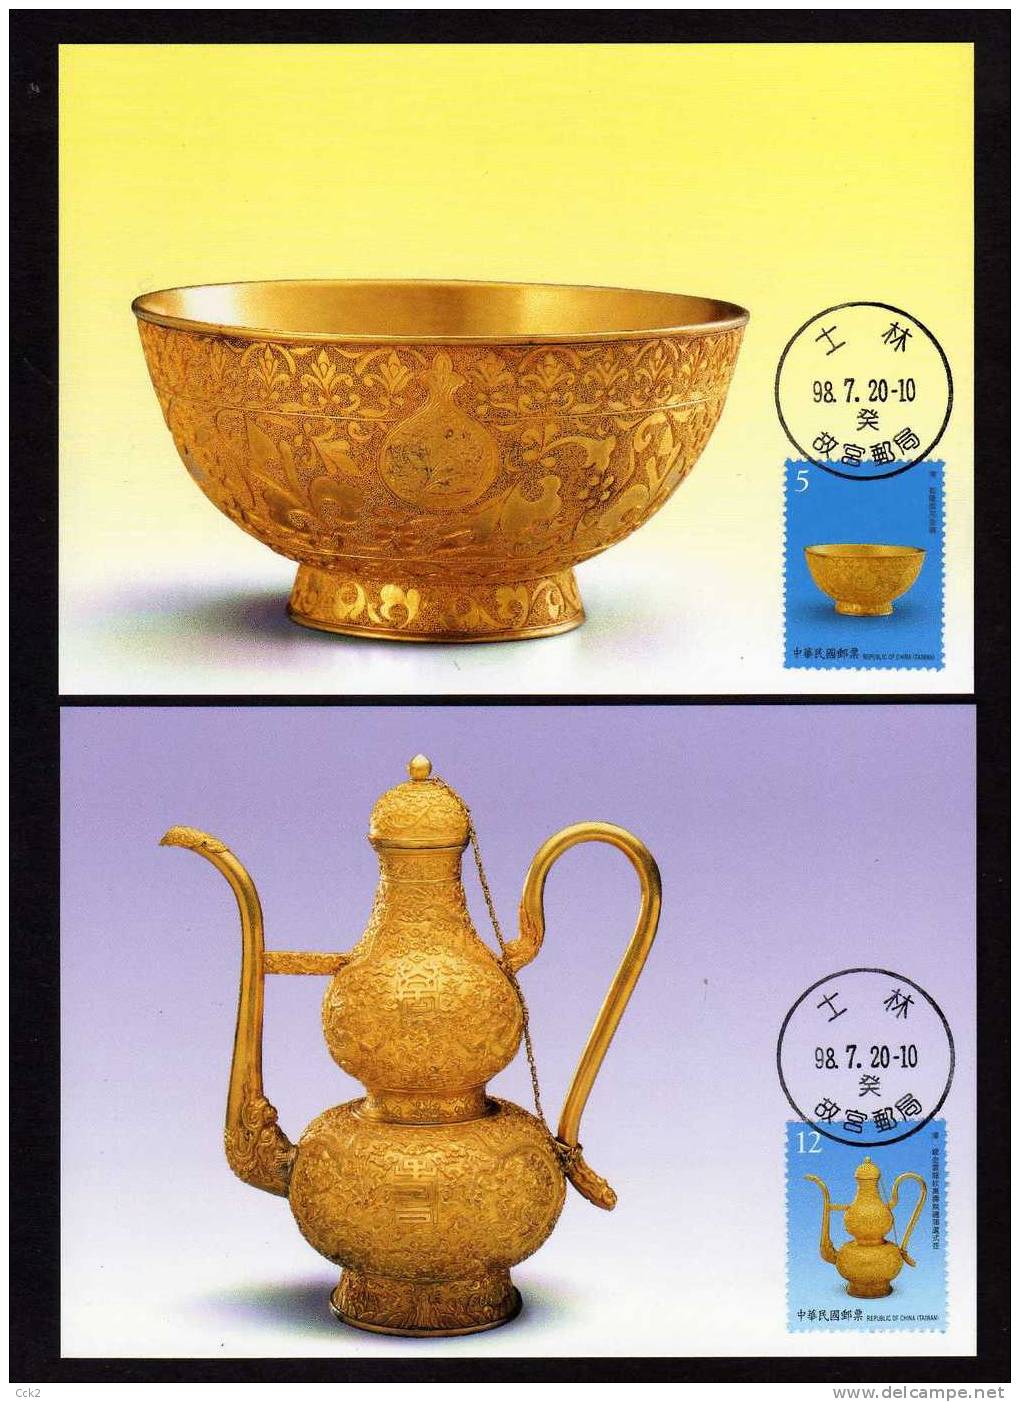 Taiwan (Formosa)- Maximum Cards –Ancient Chinese Art Treasures 2009(4V) - Museen